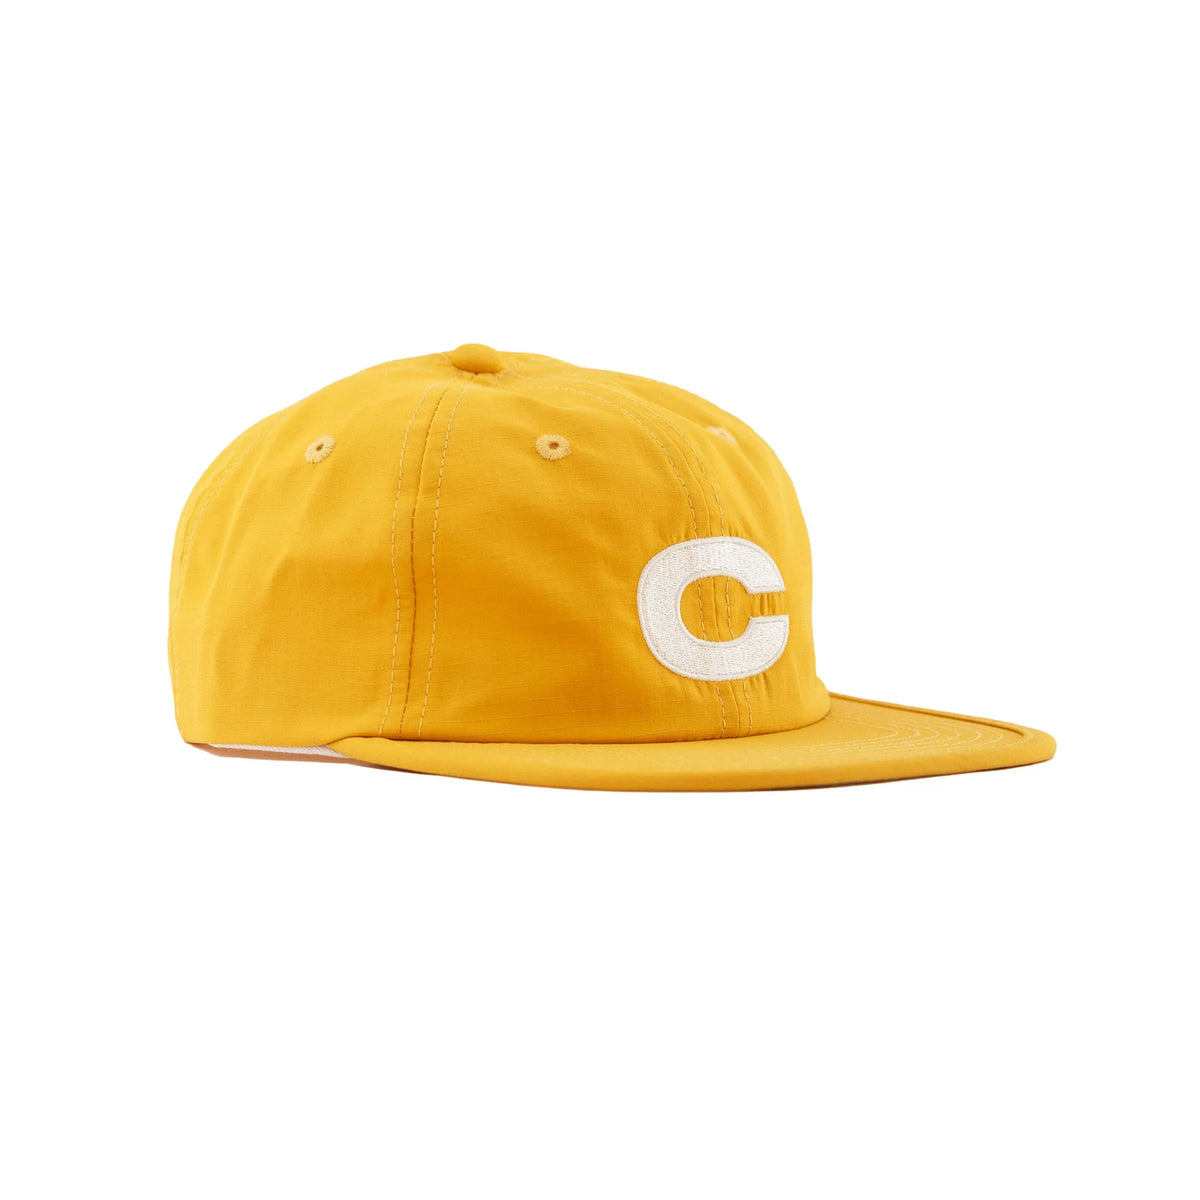 Cleaver - "C-Rip" hat - gold